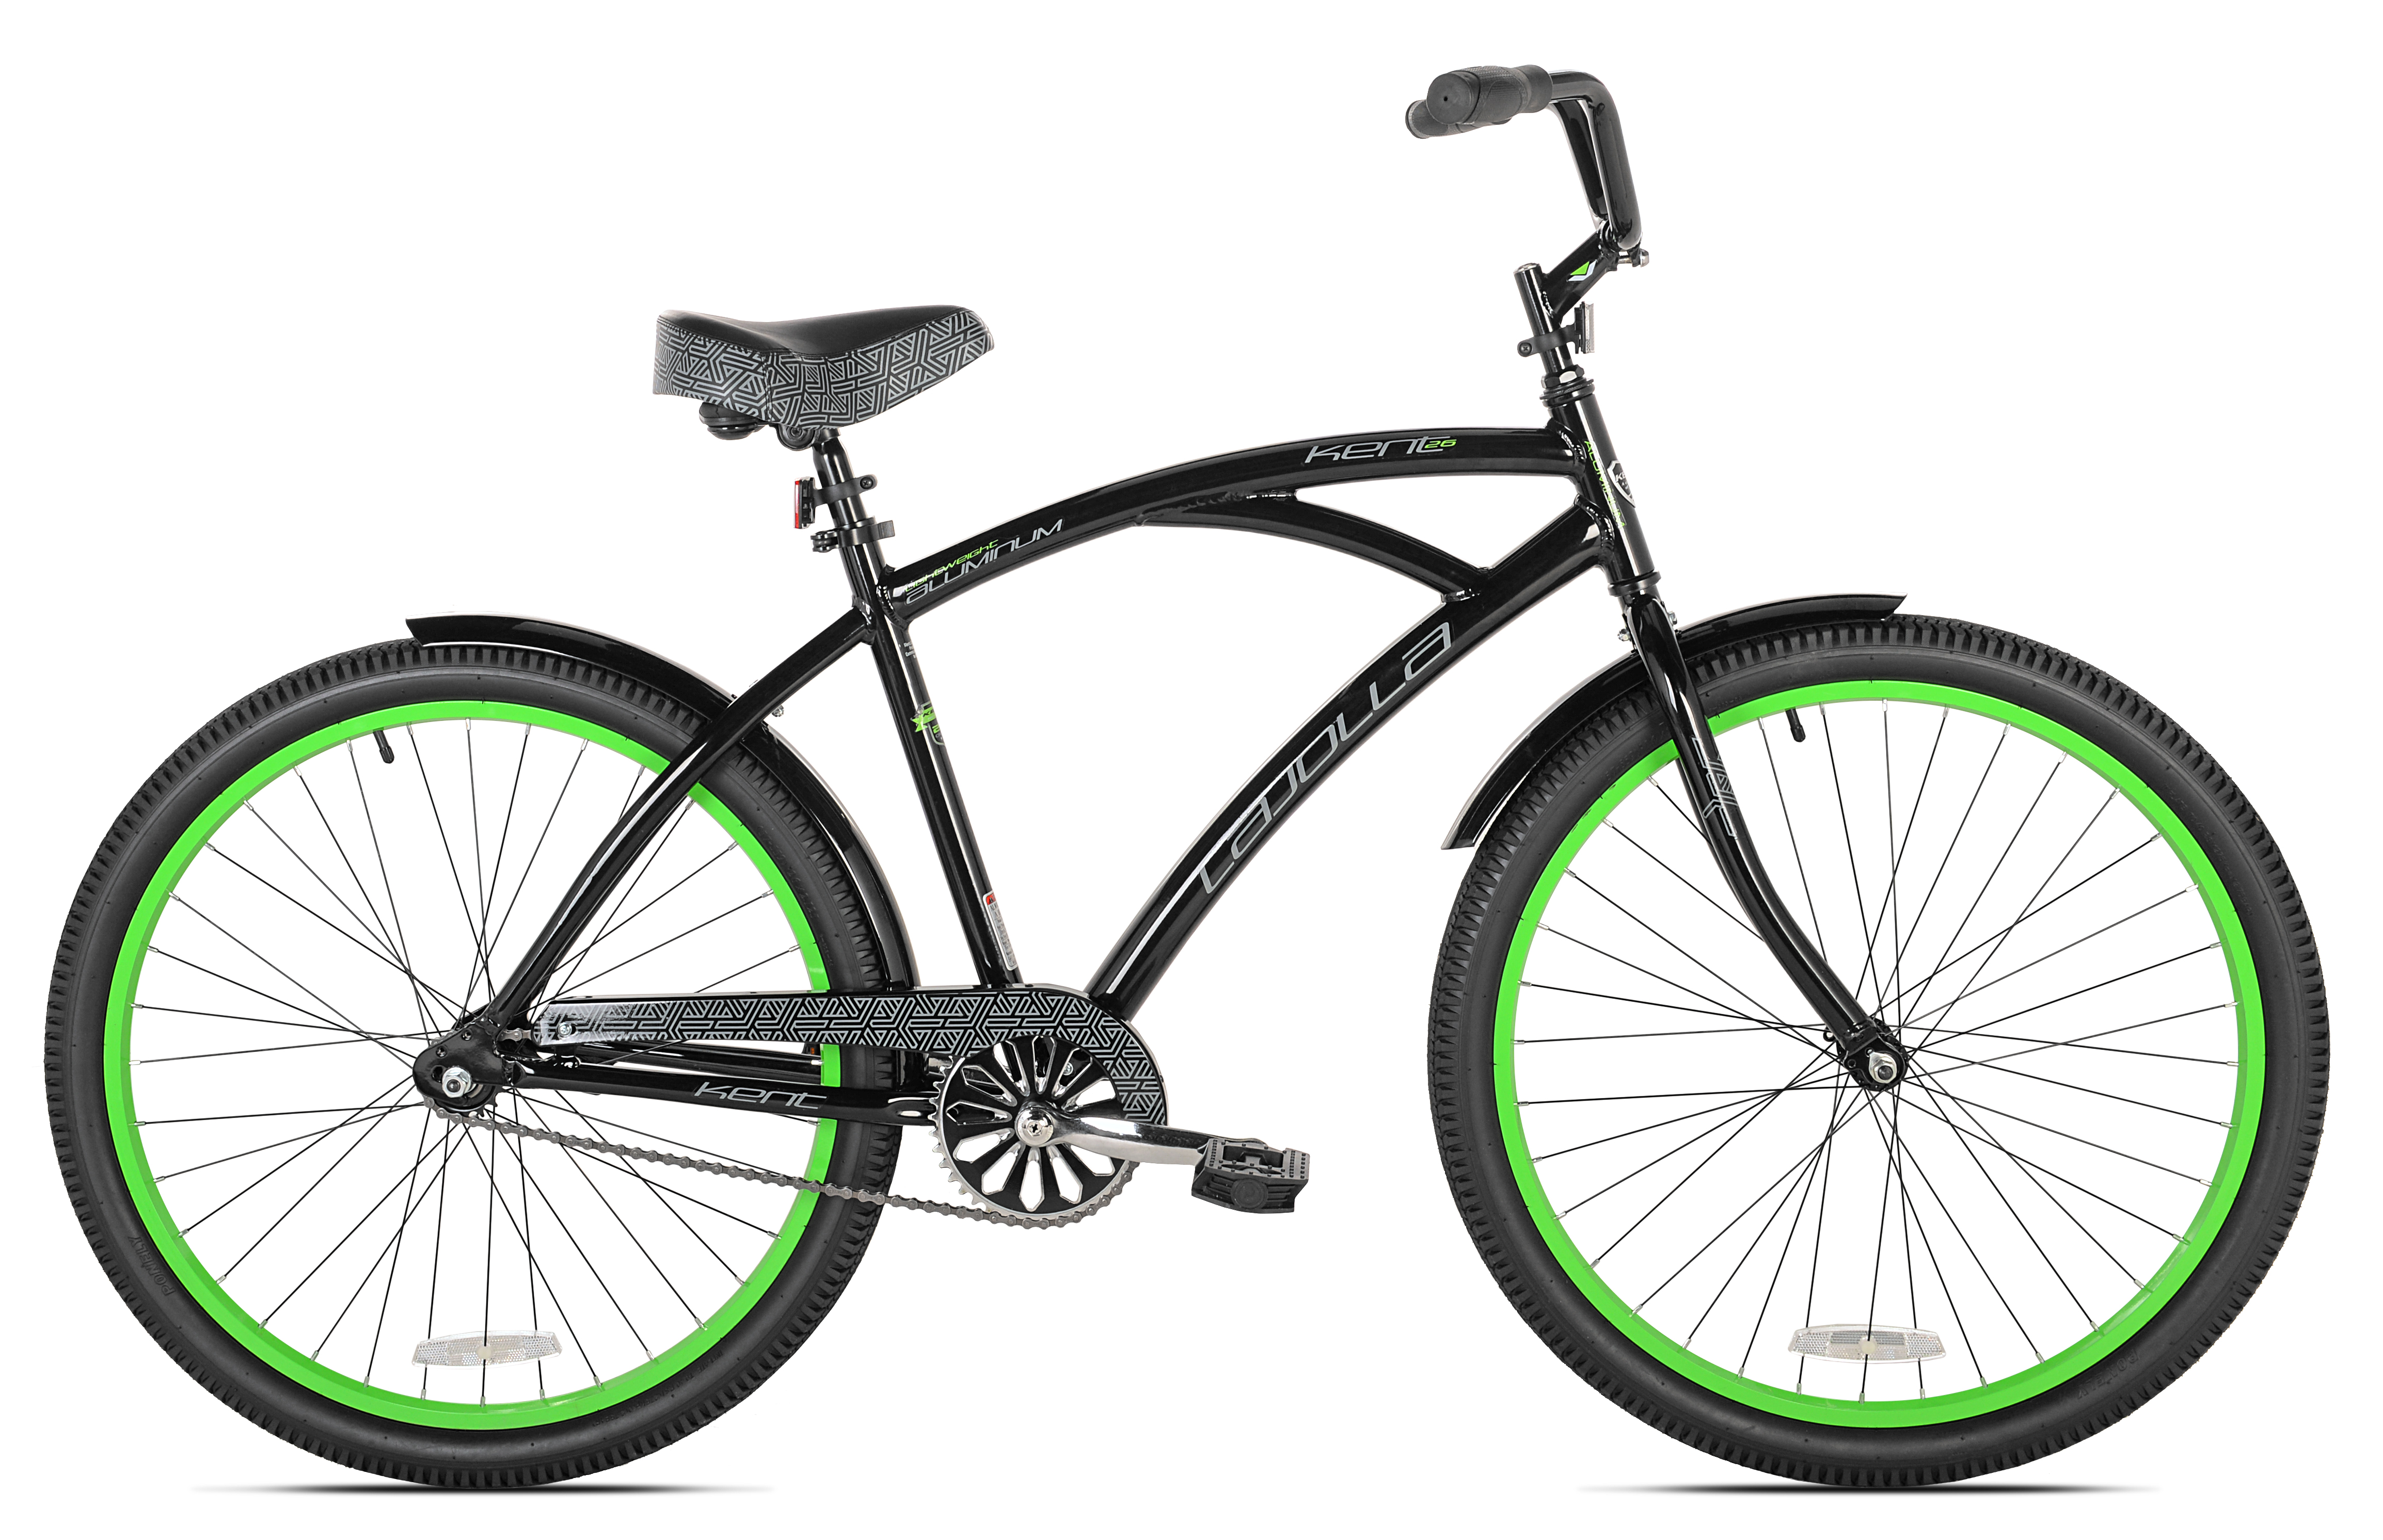 Kent 26" La Jolla Cruiser Men's Bike, Black/Green - image 3 of 7